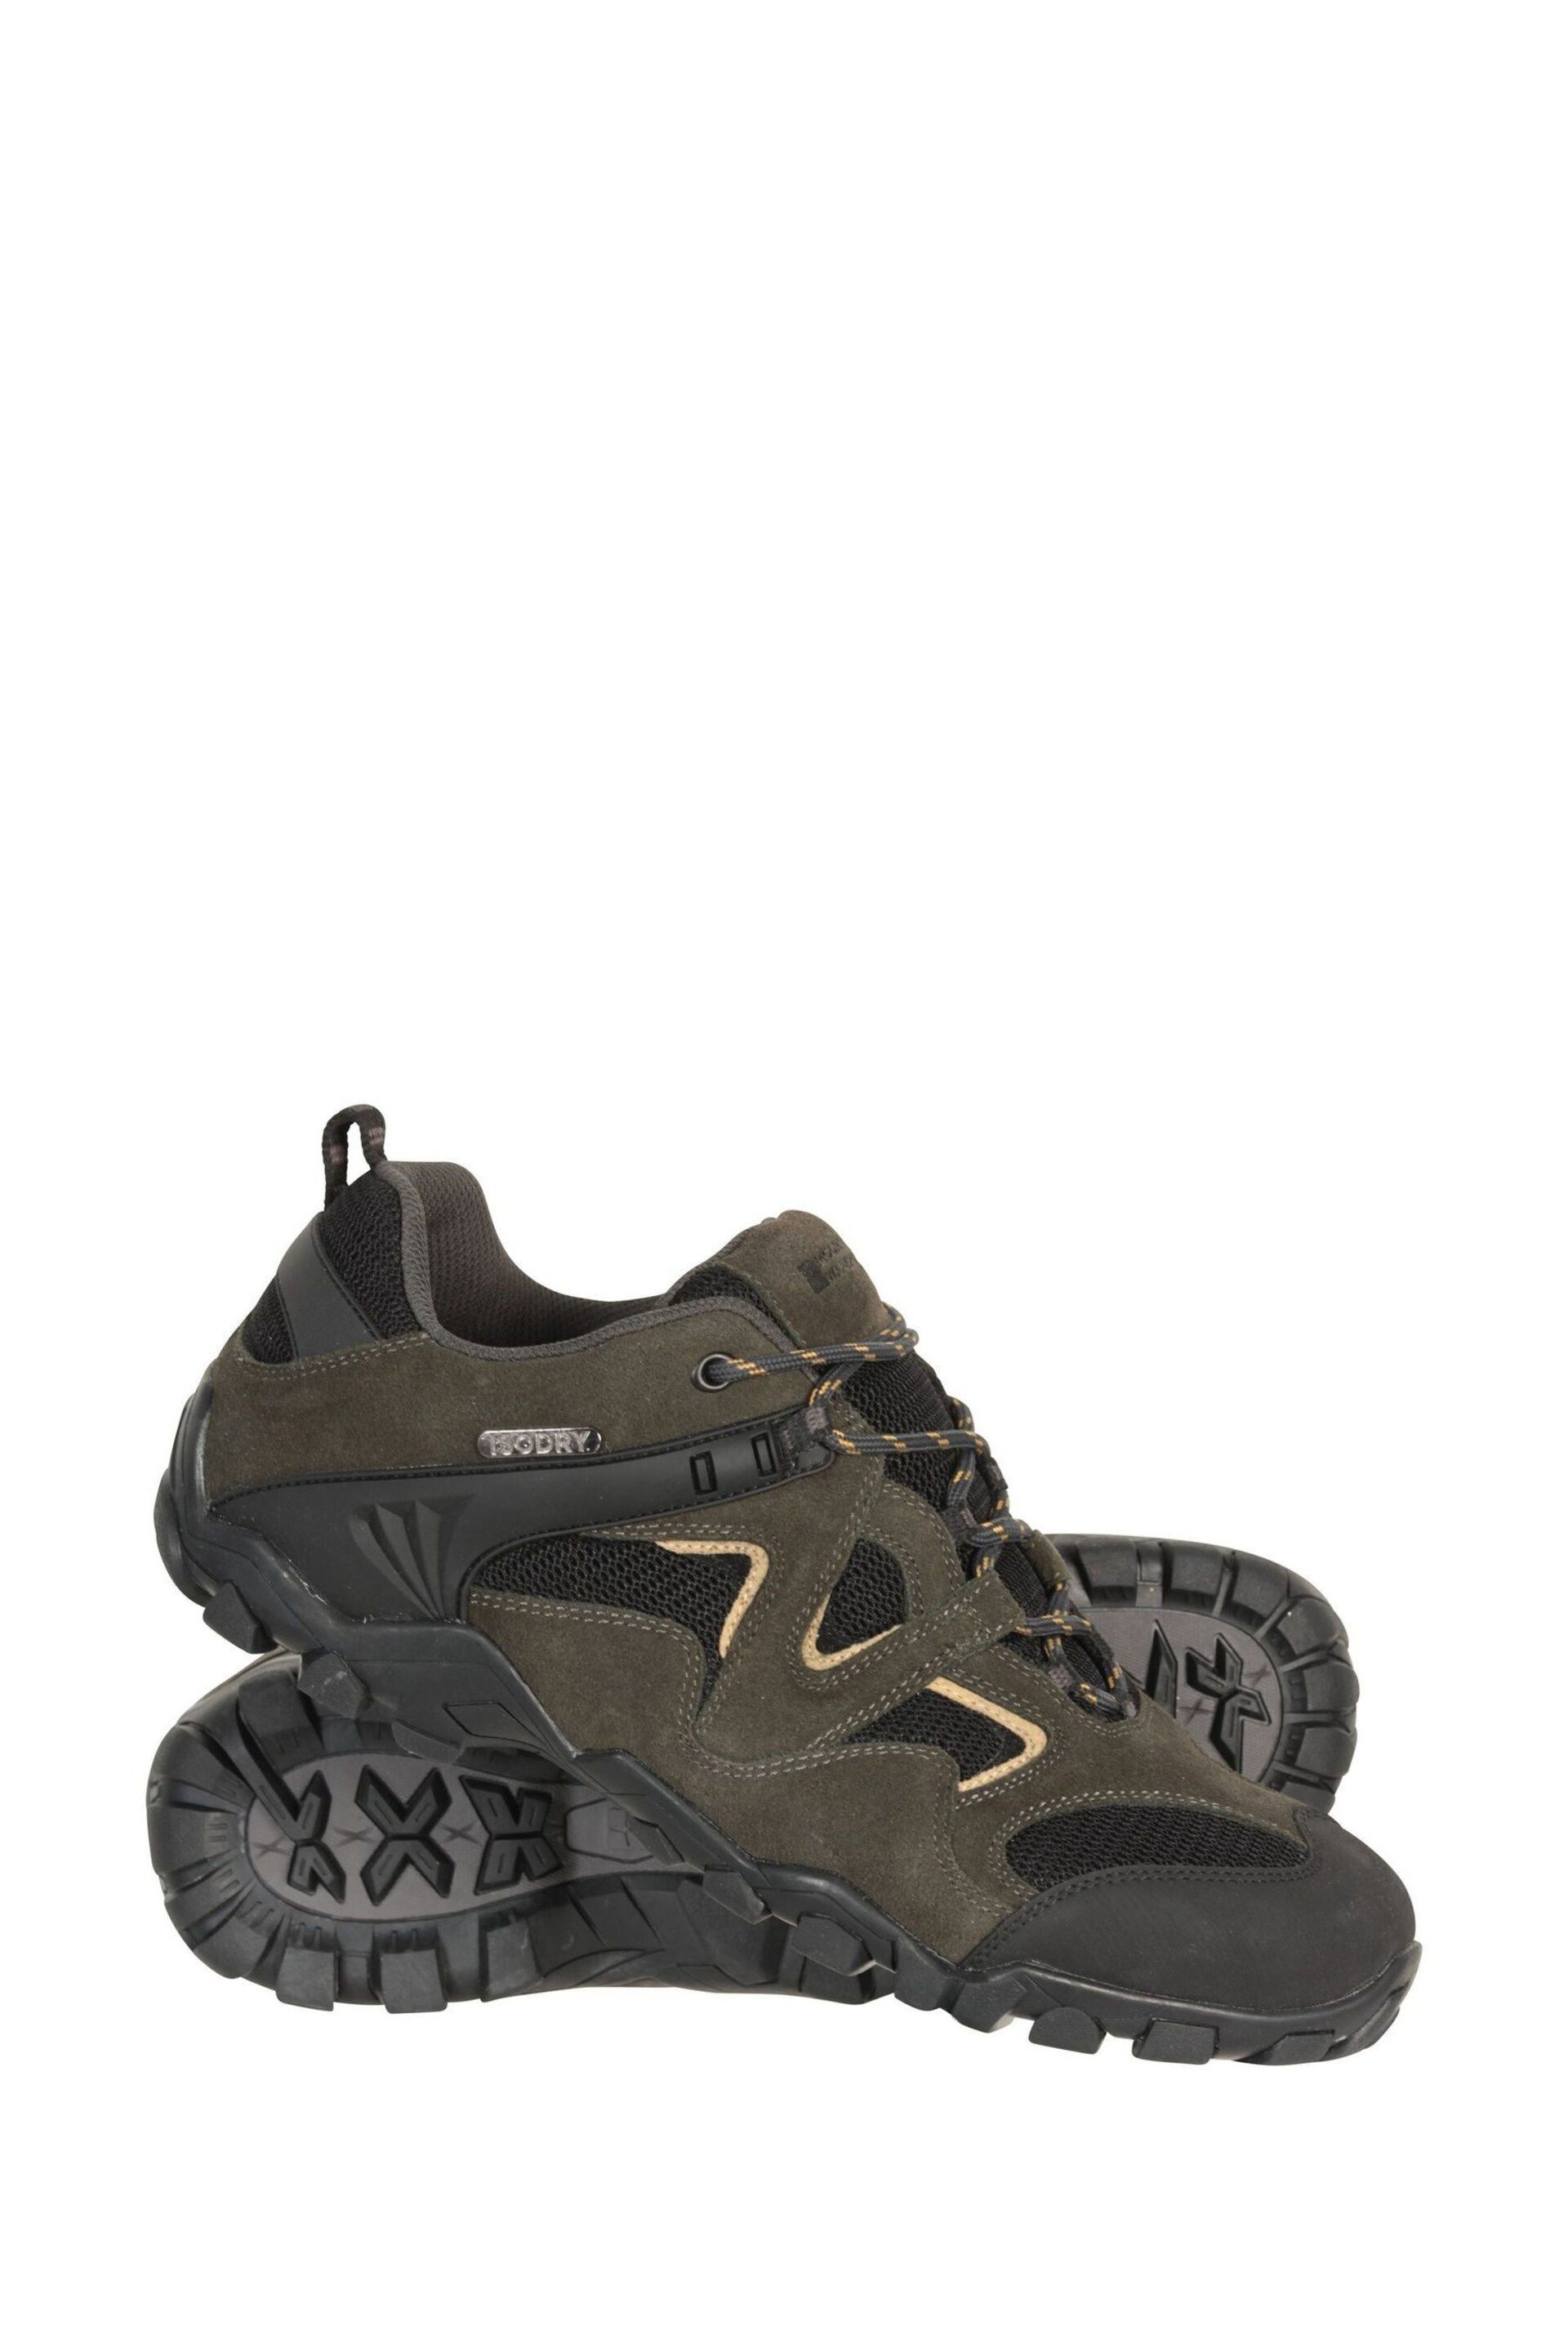 Mountain Warehouse Green Mens Curlews Waterproof Walking Shoes - Image 1 of 5